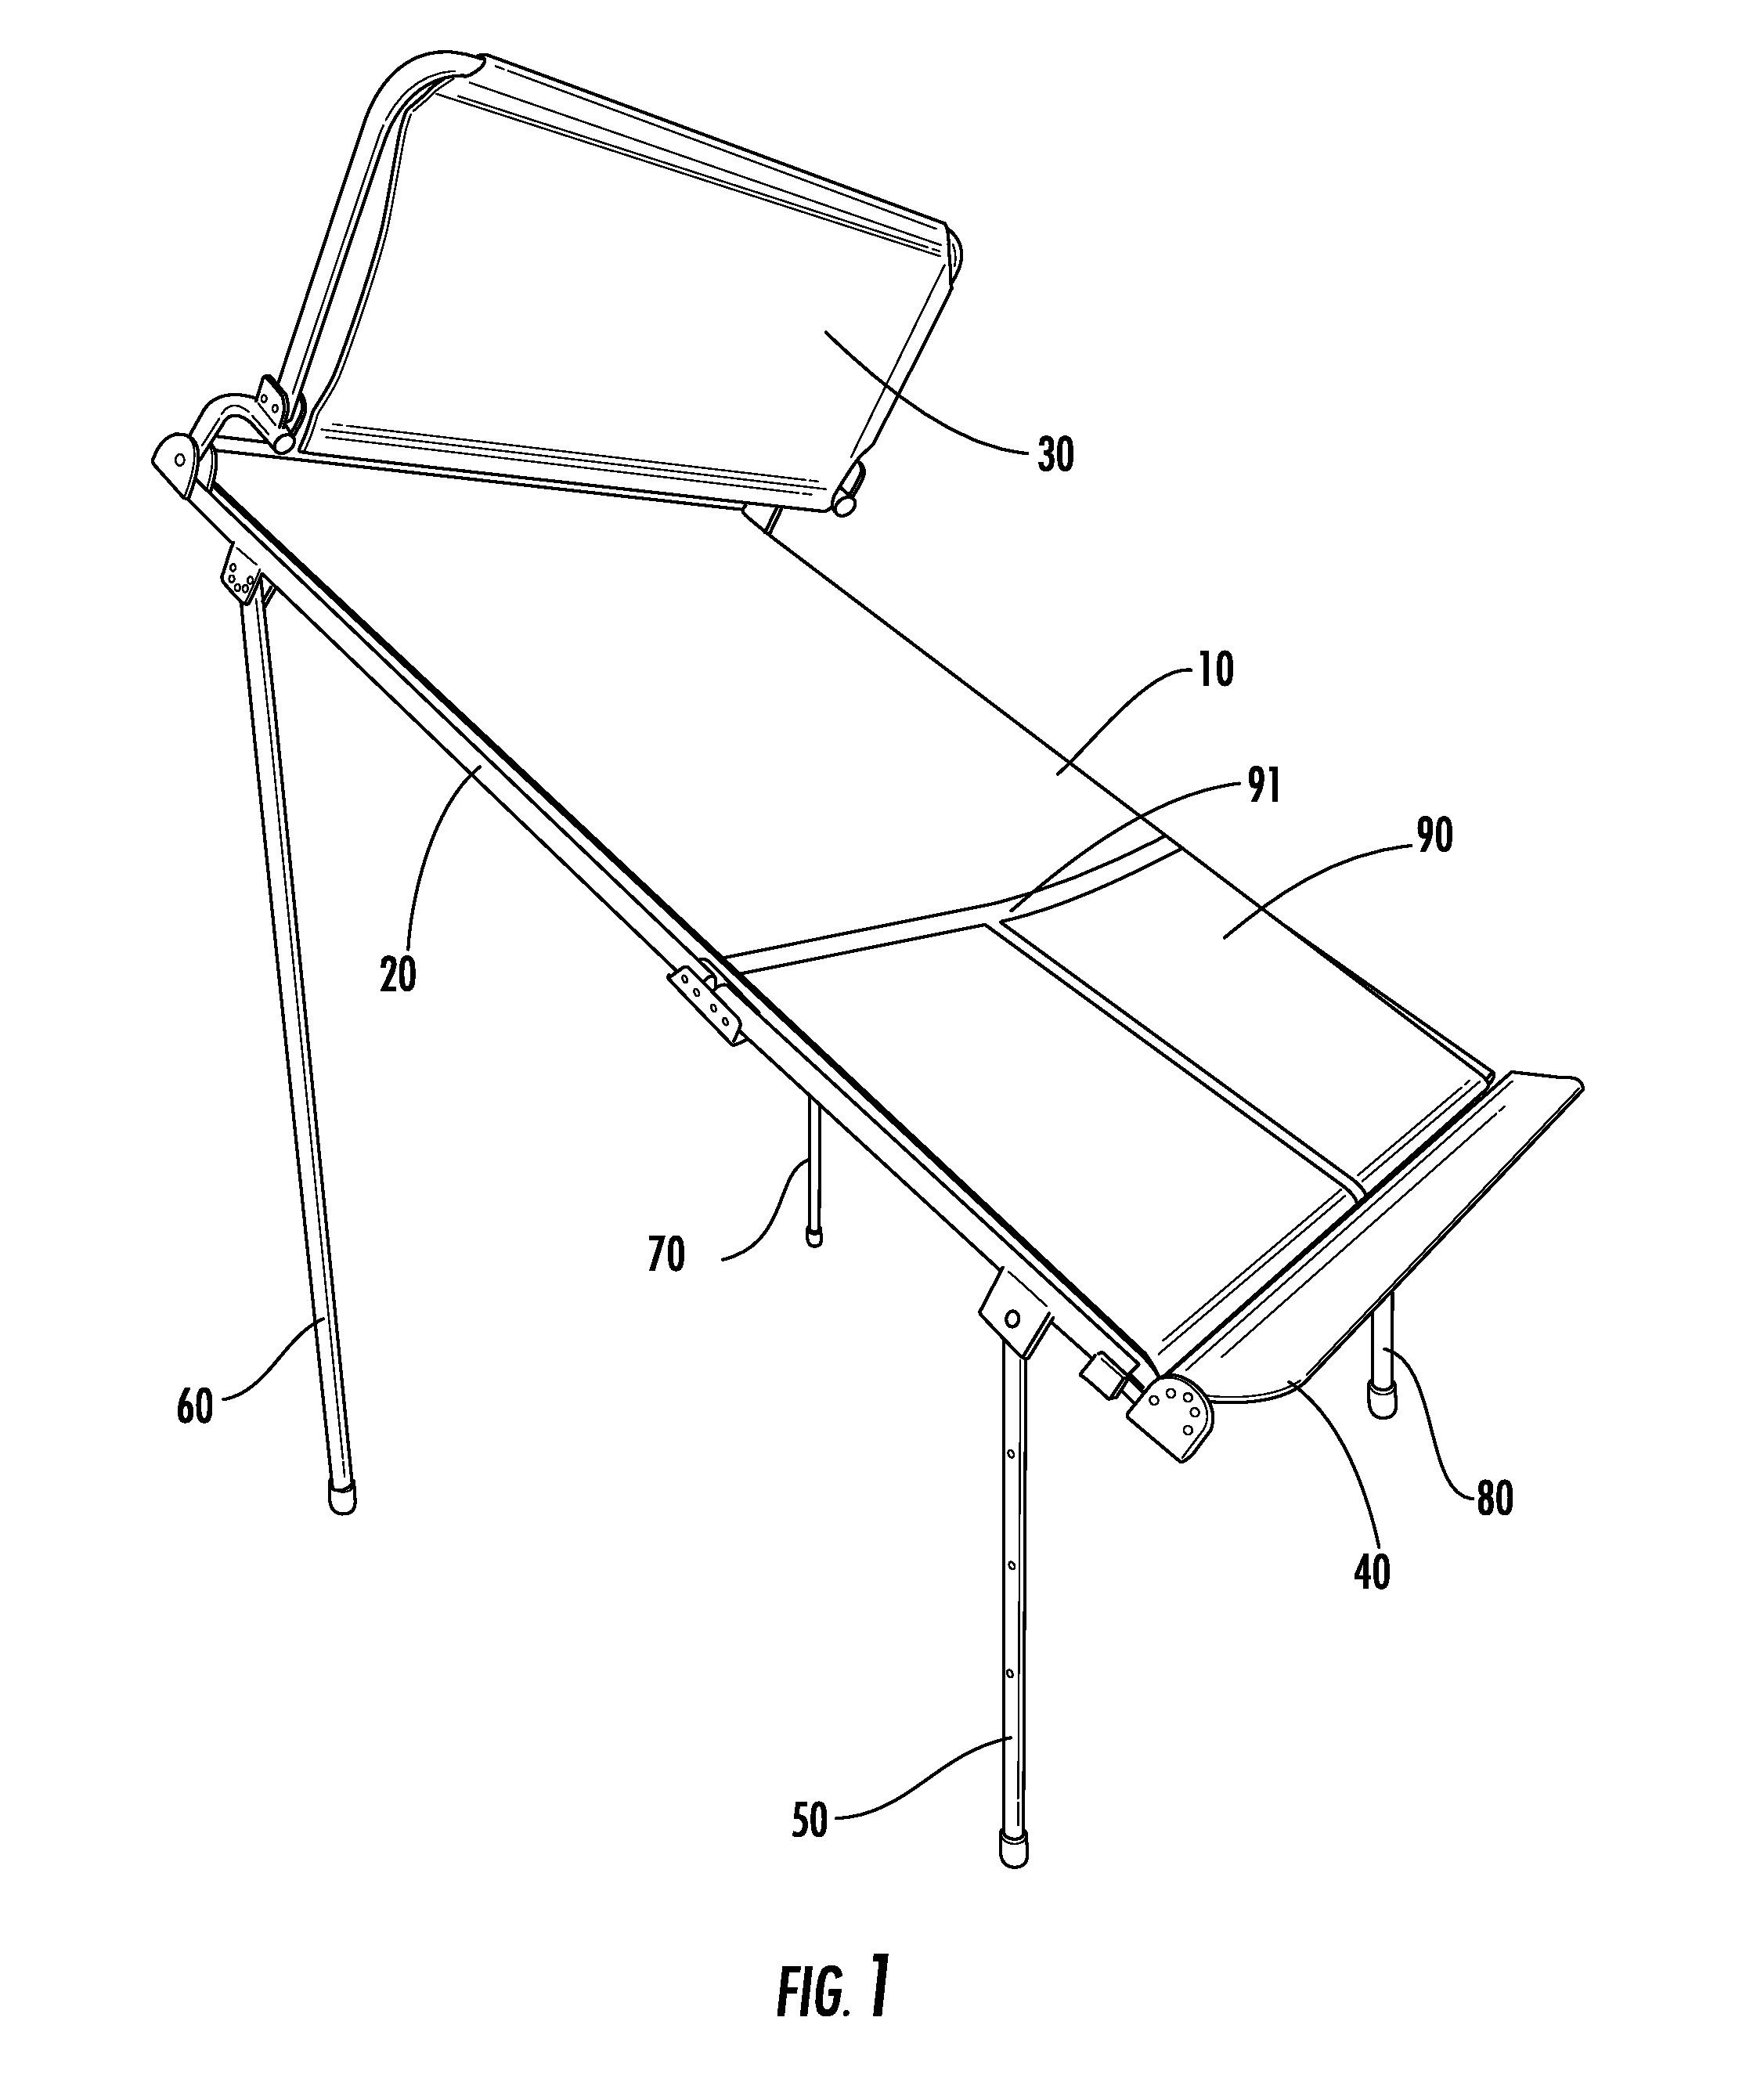 Training apparatus for developing proper tennis swing technique